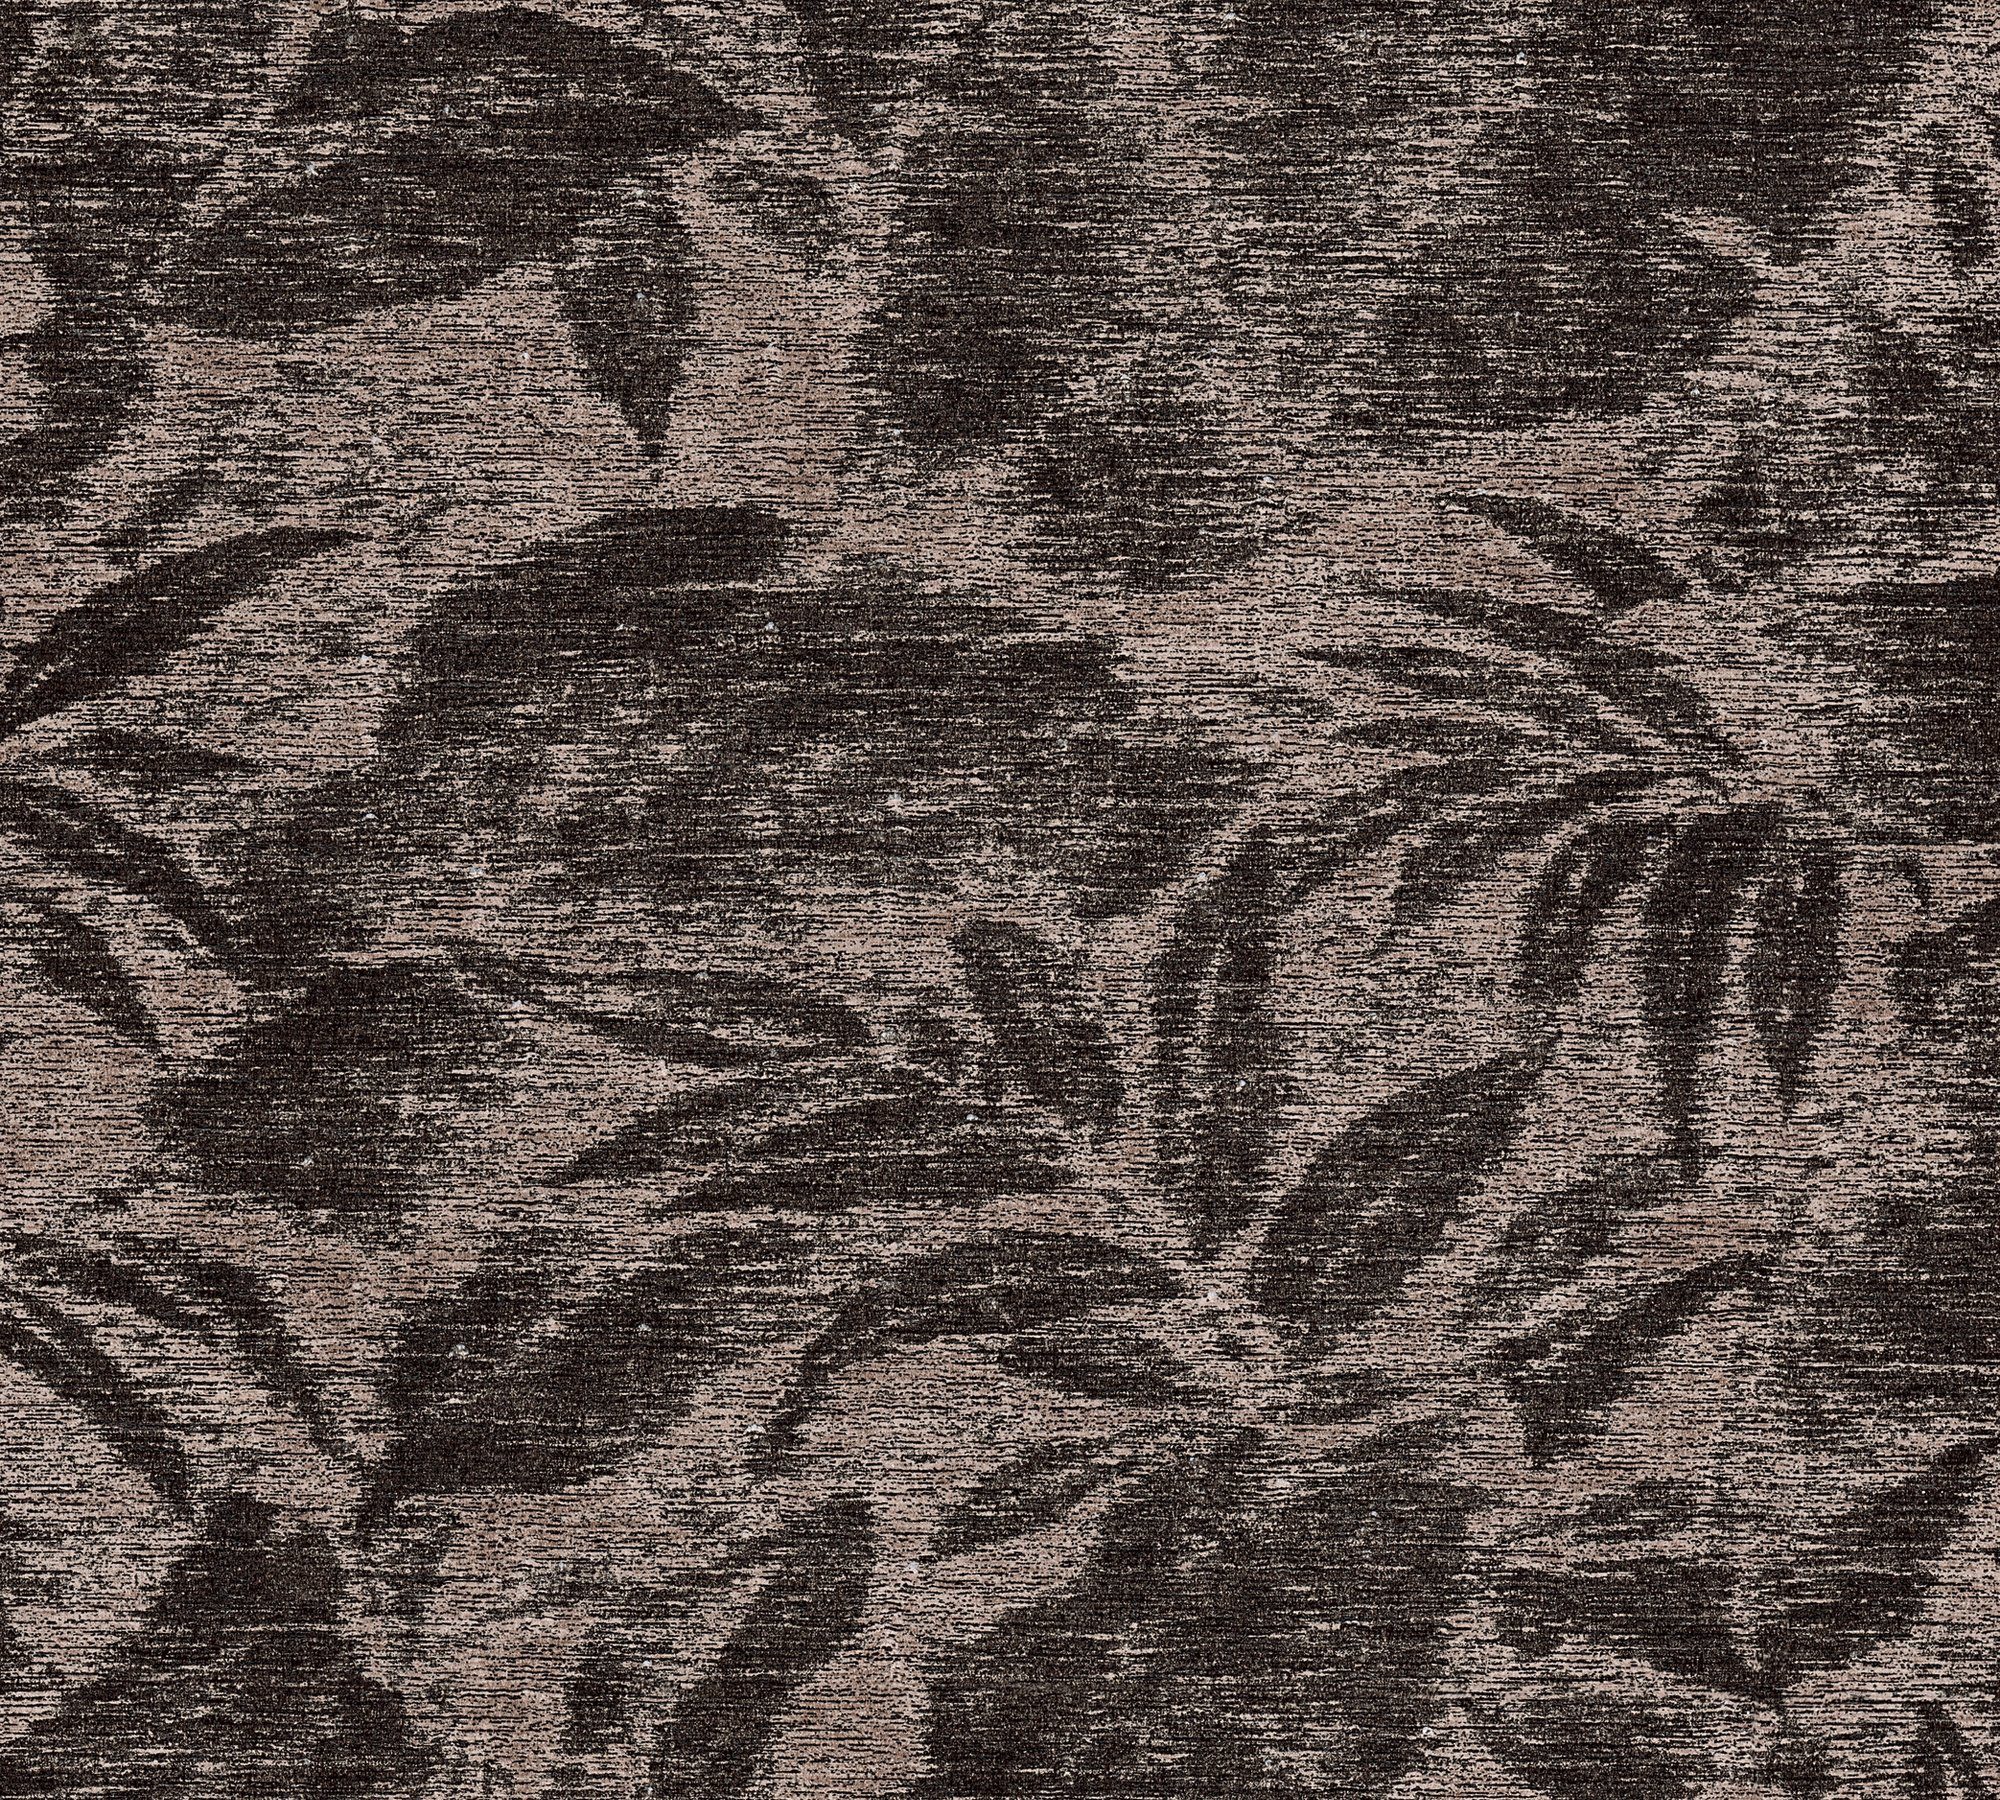 Palmentapete A.S. Tapete Greenery Vliestapete mit braun Blätter Motiv, Création floral, Dschungel